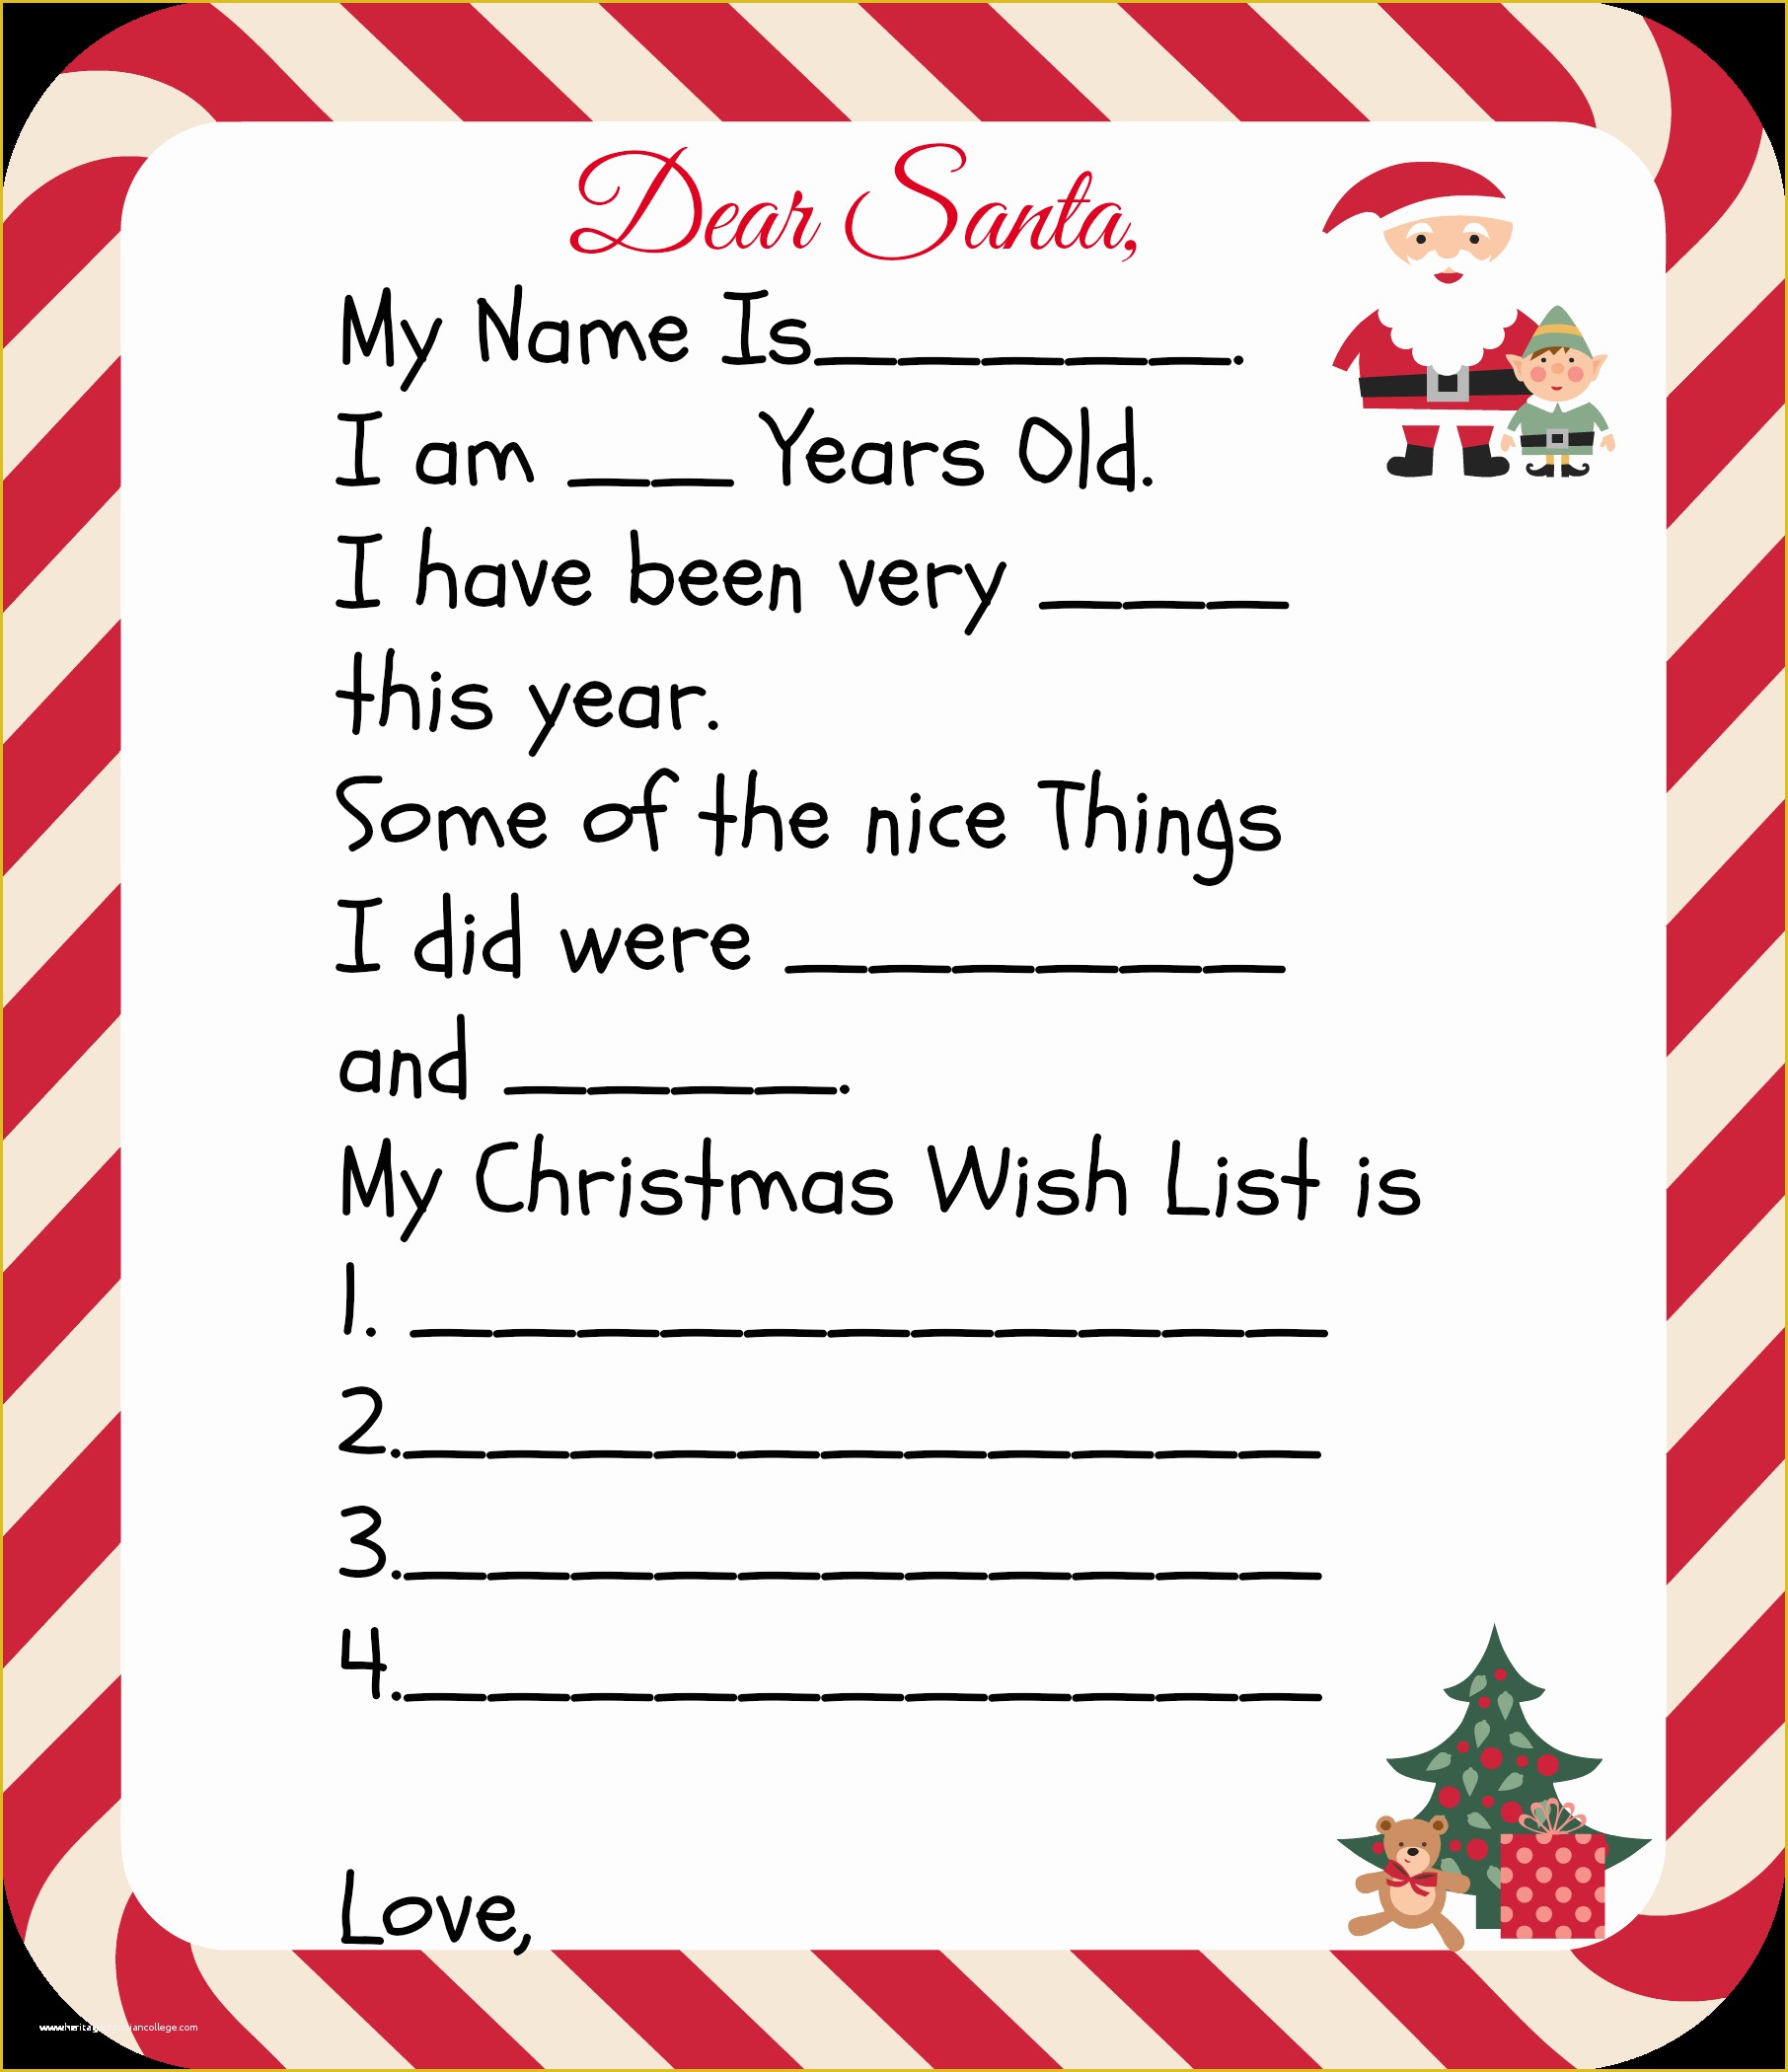 Dear Santa Letter Template Free Of Free Printable Santa Letters for Kids